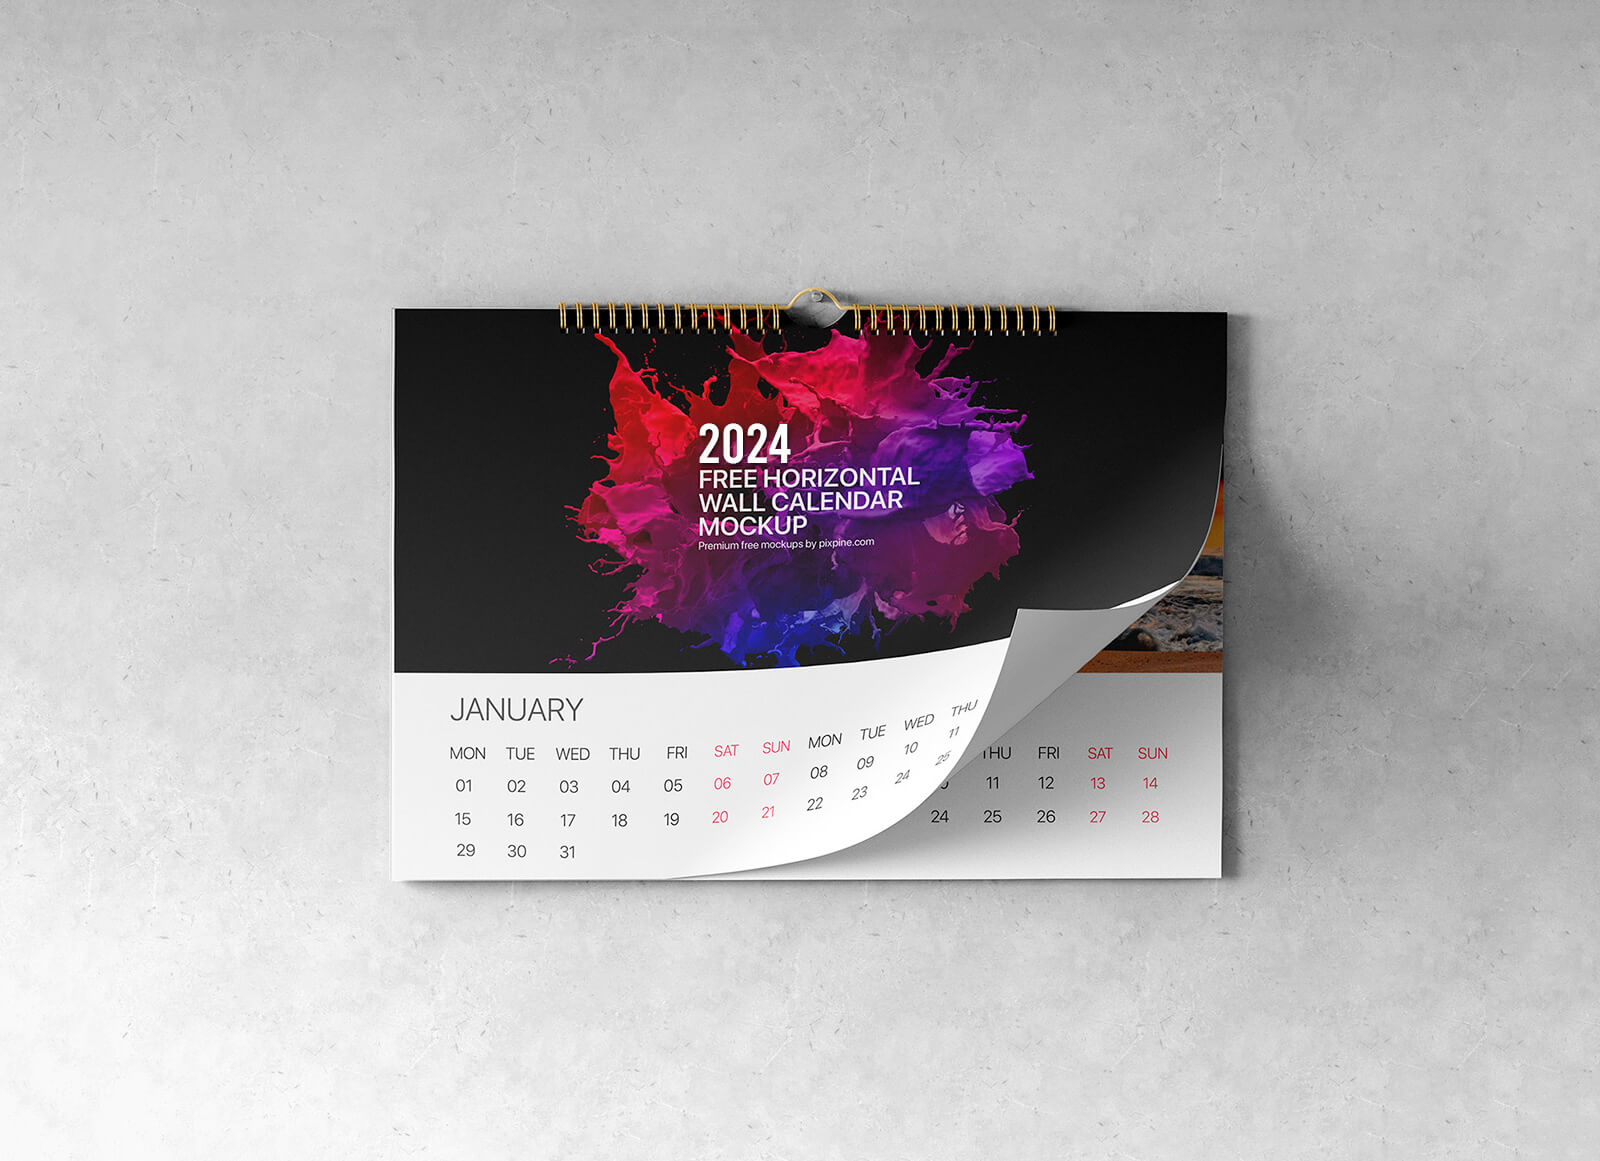 Free-Horizontal-Wall-Calendar-Mockup-PSD